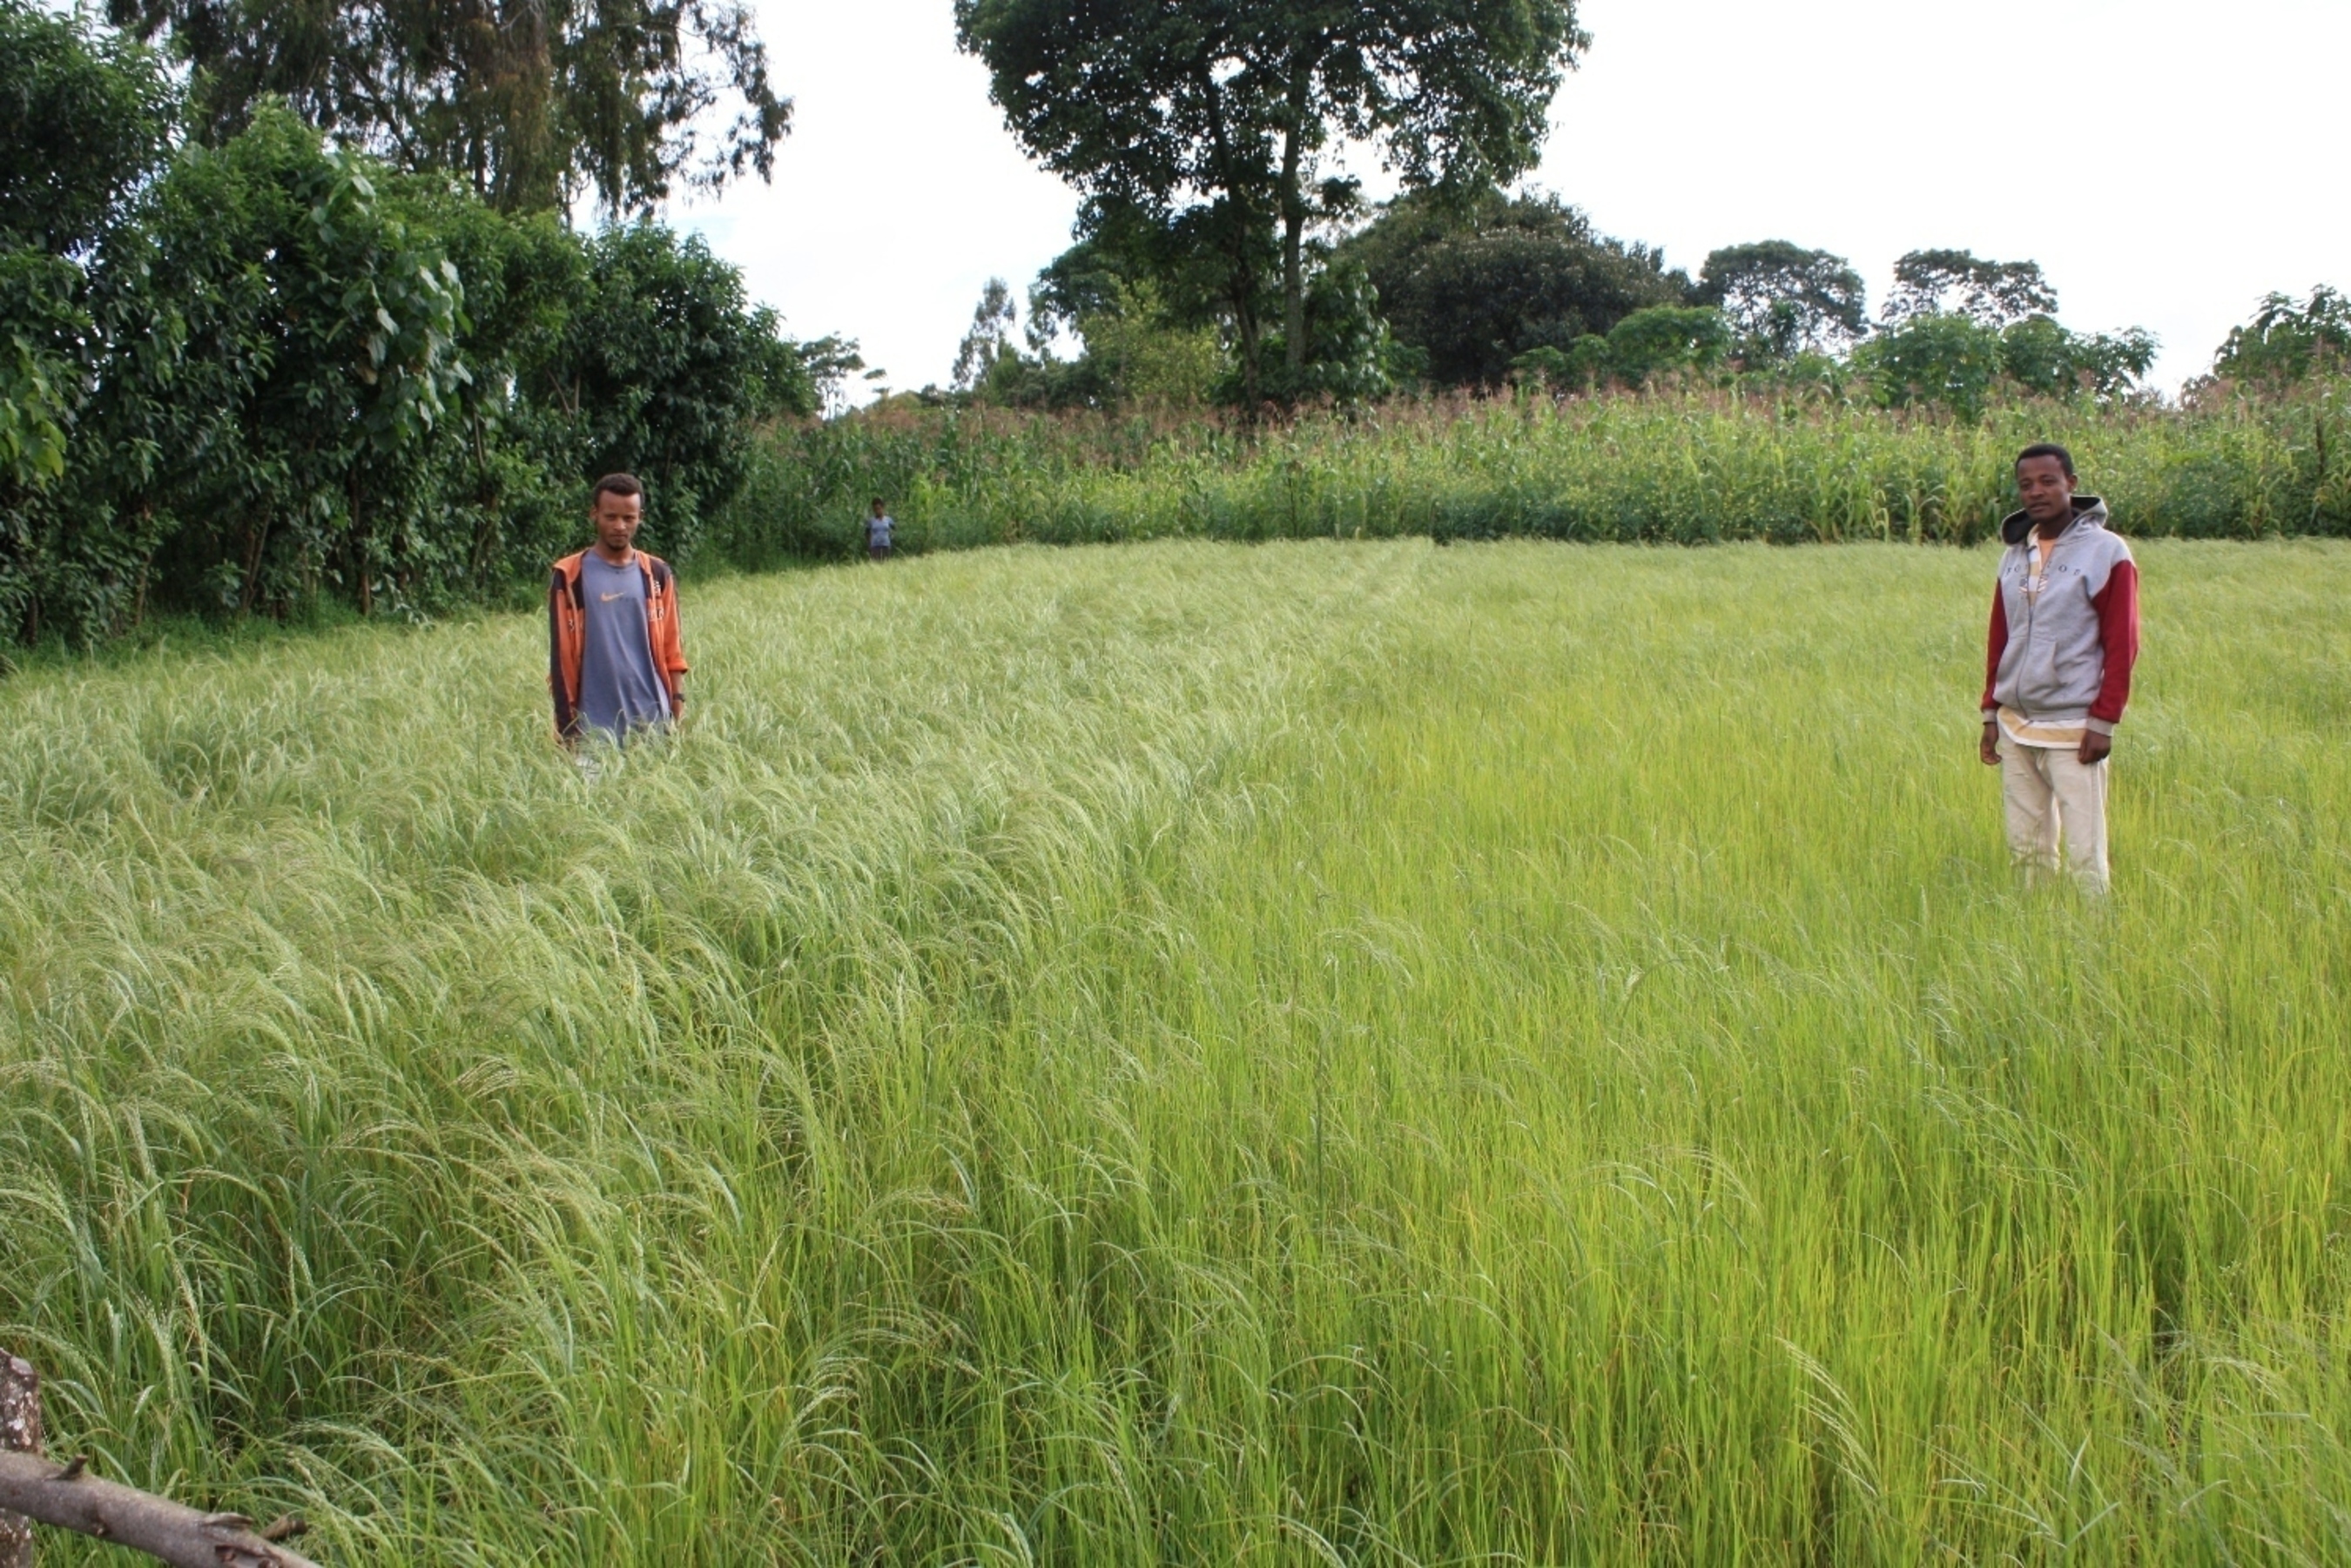 Potash demonstration plot in teff crop at Lekemt, Oromia region, Ethiopia. Left side: with potash application; right side: without potash application. Photo taken by Eldad Sokolowski, Agronomist, ICL Fertilizers (PRNewsFoto/ICL)